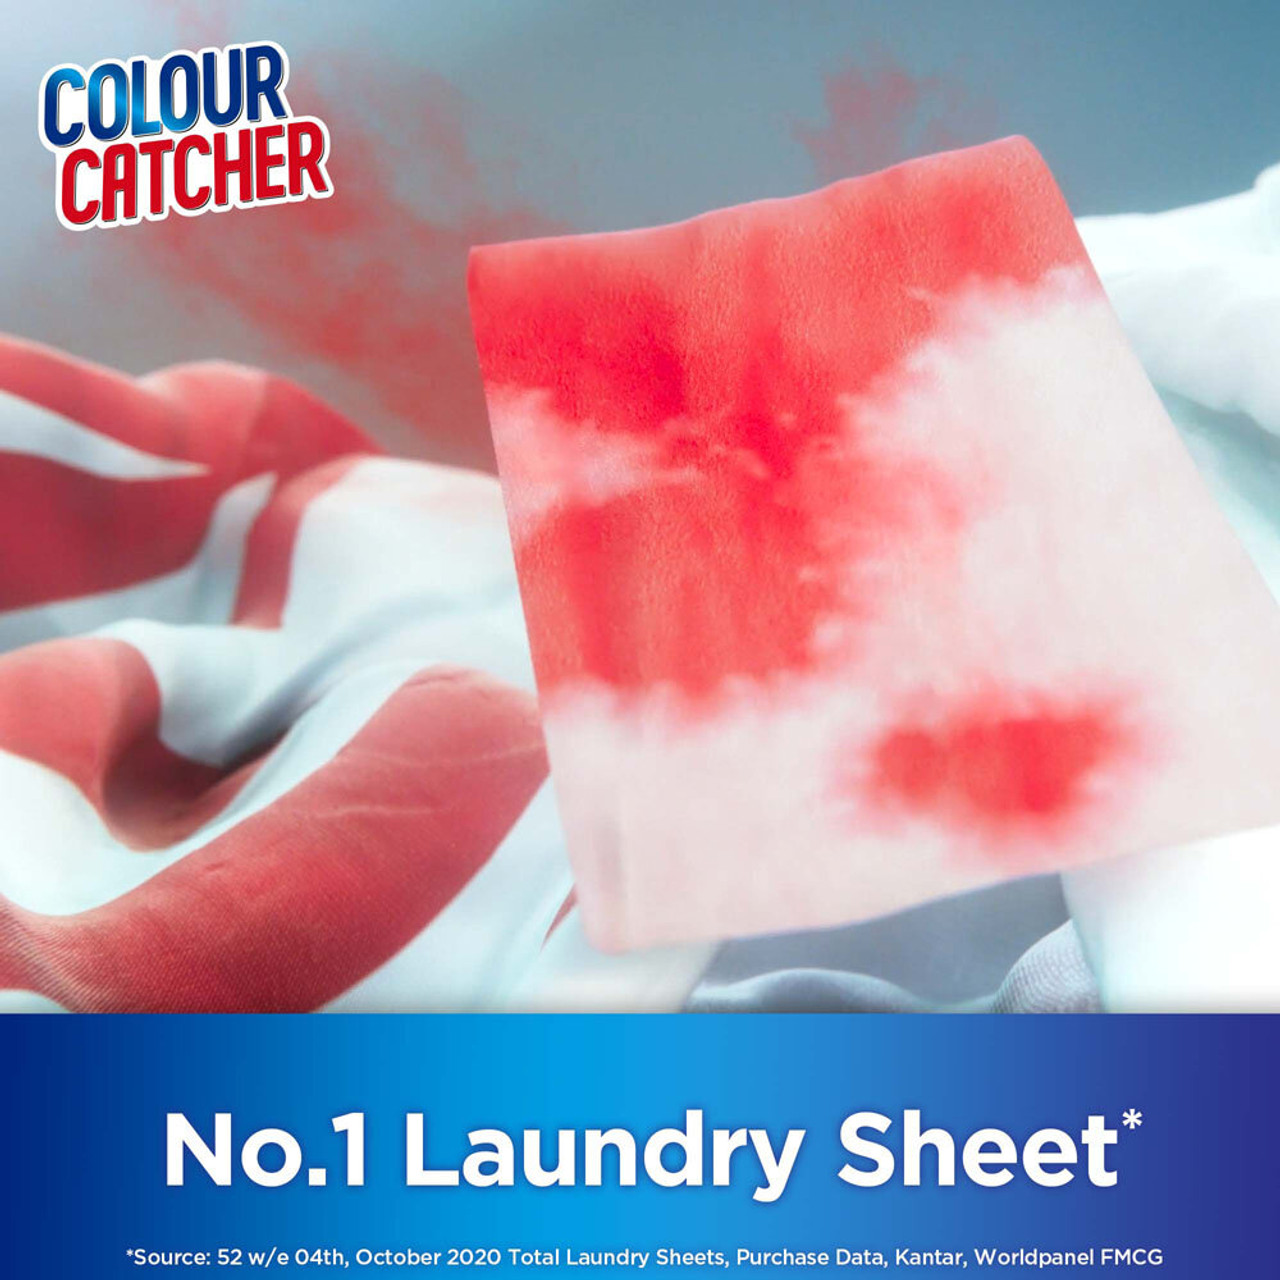 Colour Catcher Max Protect 24 Sheets – Dylon Official Website